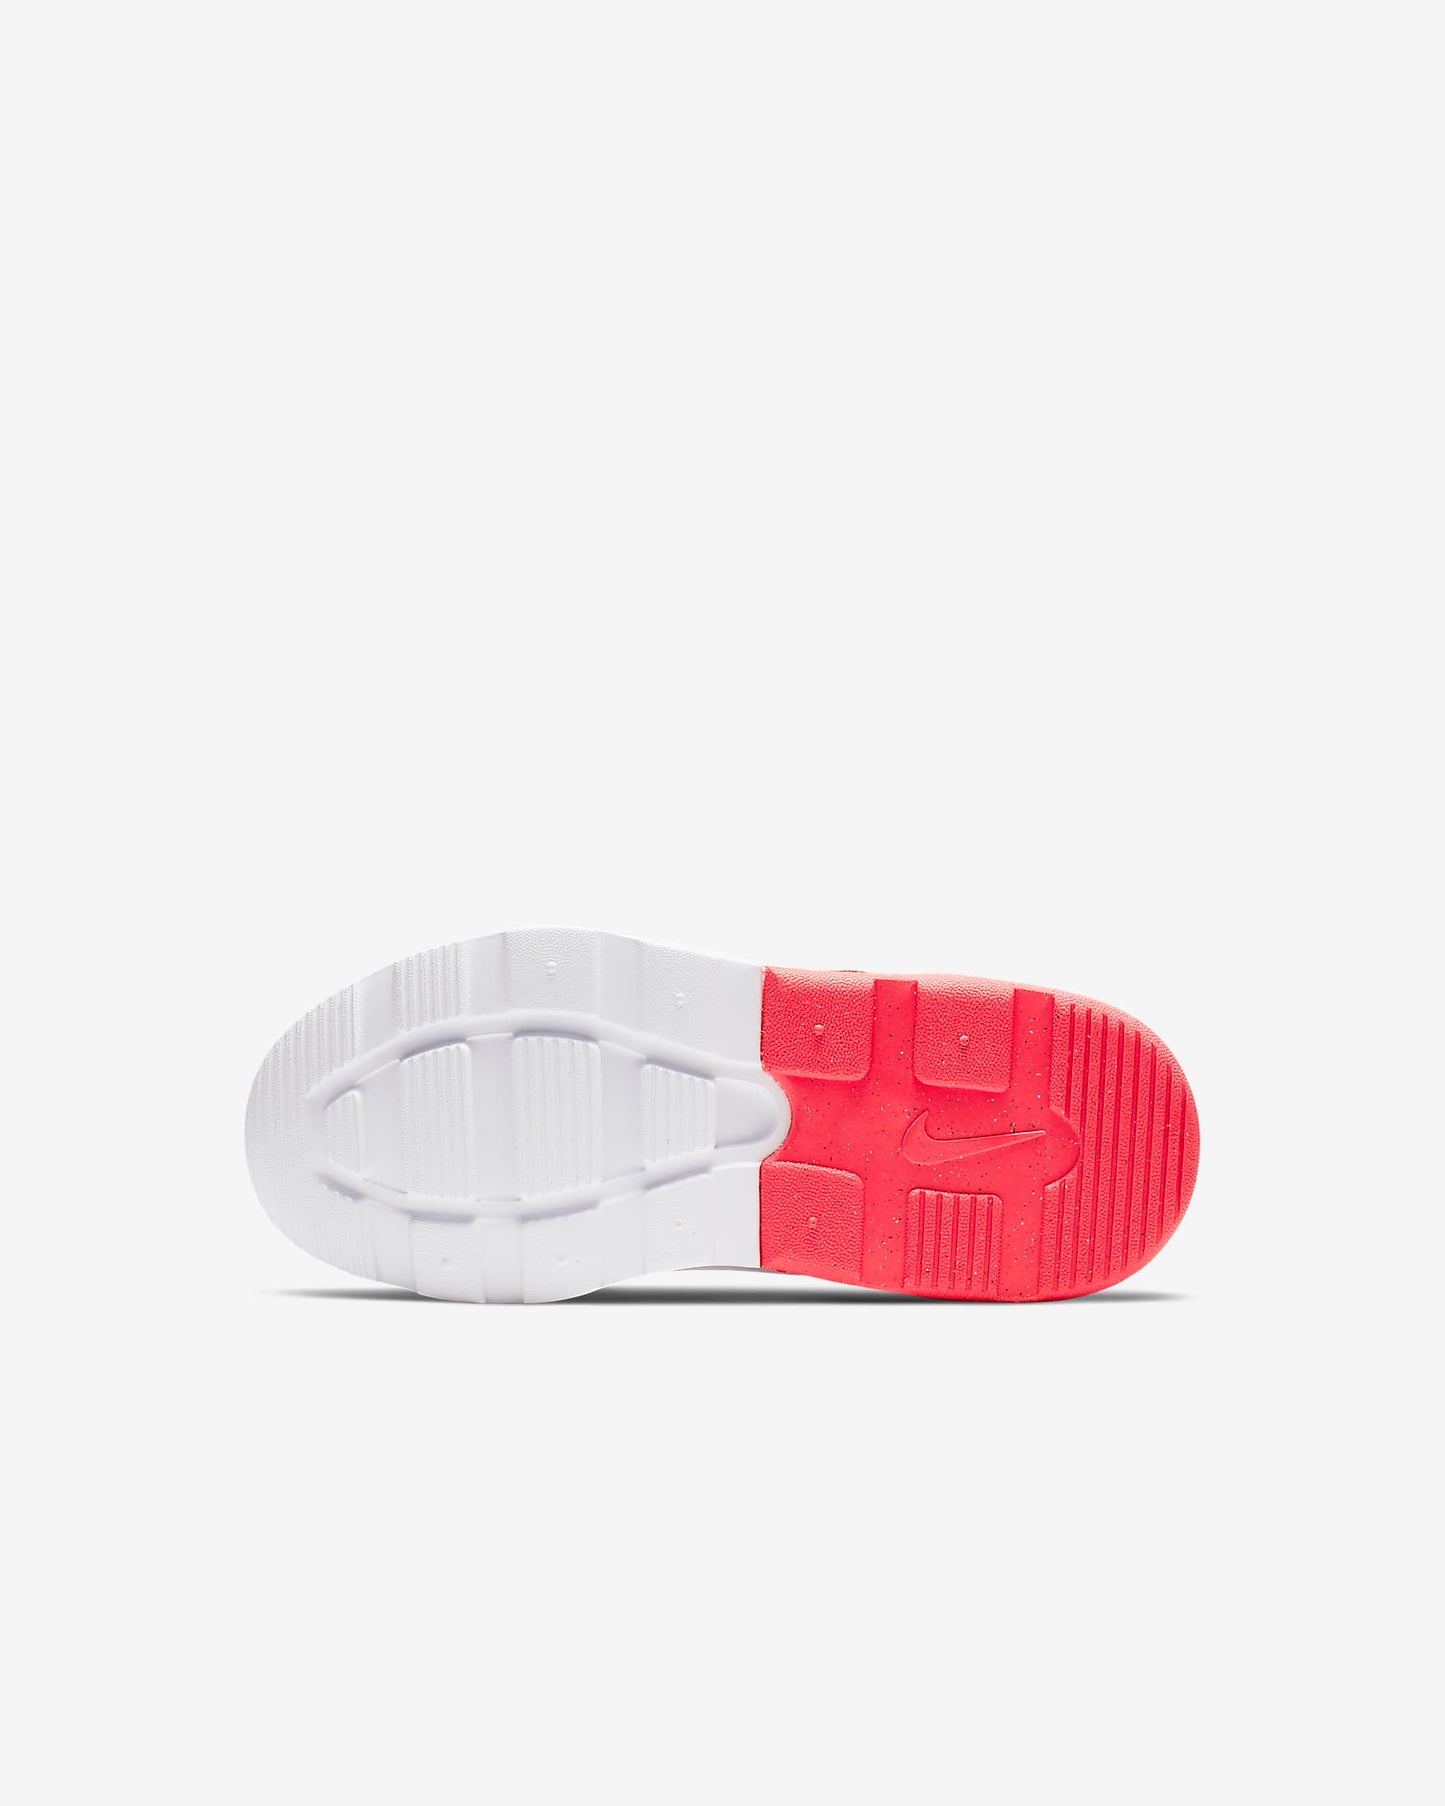 Nike Grade School Air Max Motion 2 (GS) Running Shoes, AQ2741 007 Black/Red Orbit/White